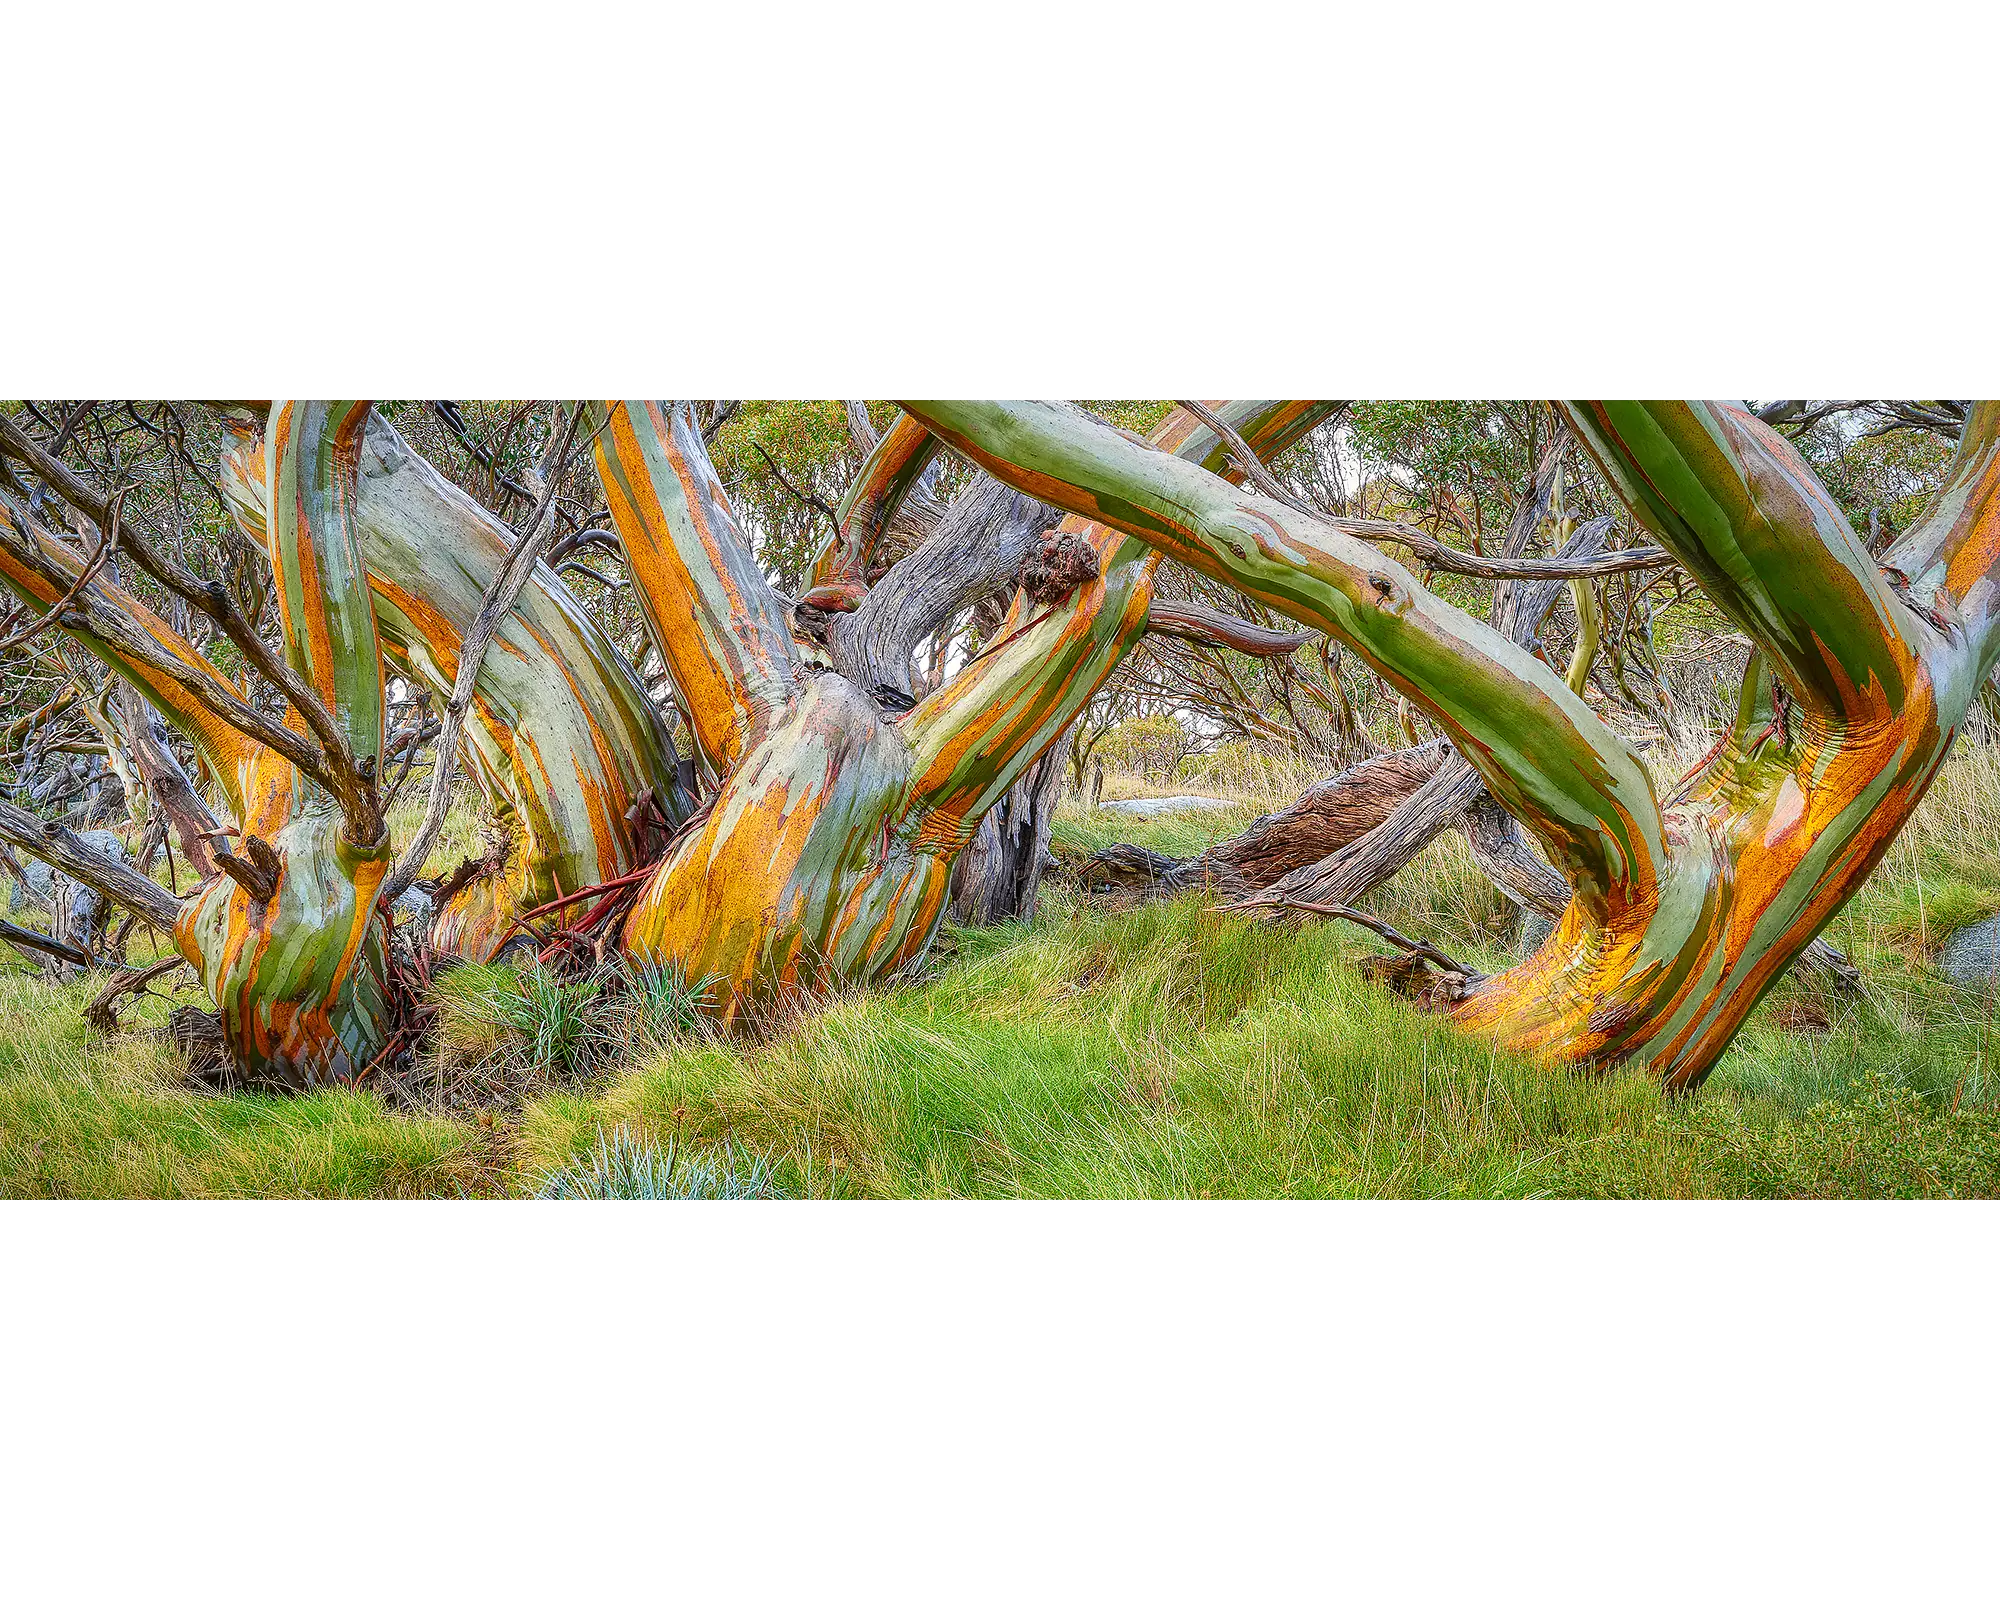 Kosi Colours - Snow gums with colourful ark, Kosciuszko National Park, New South Wales, Australia.